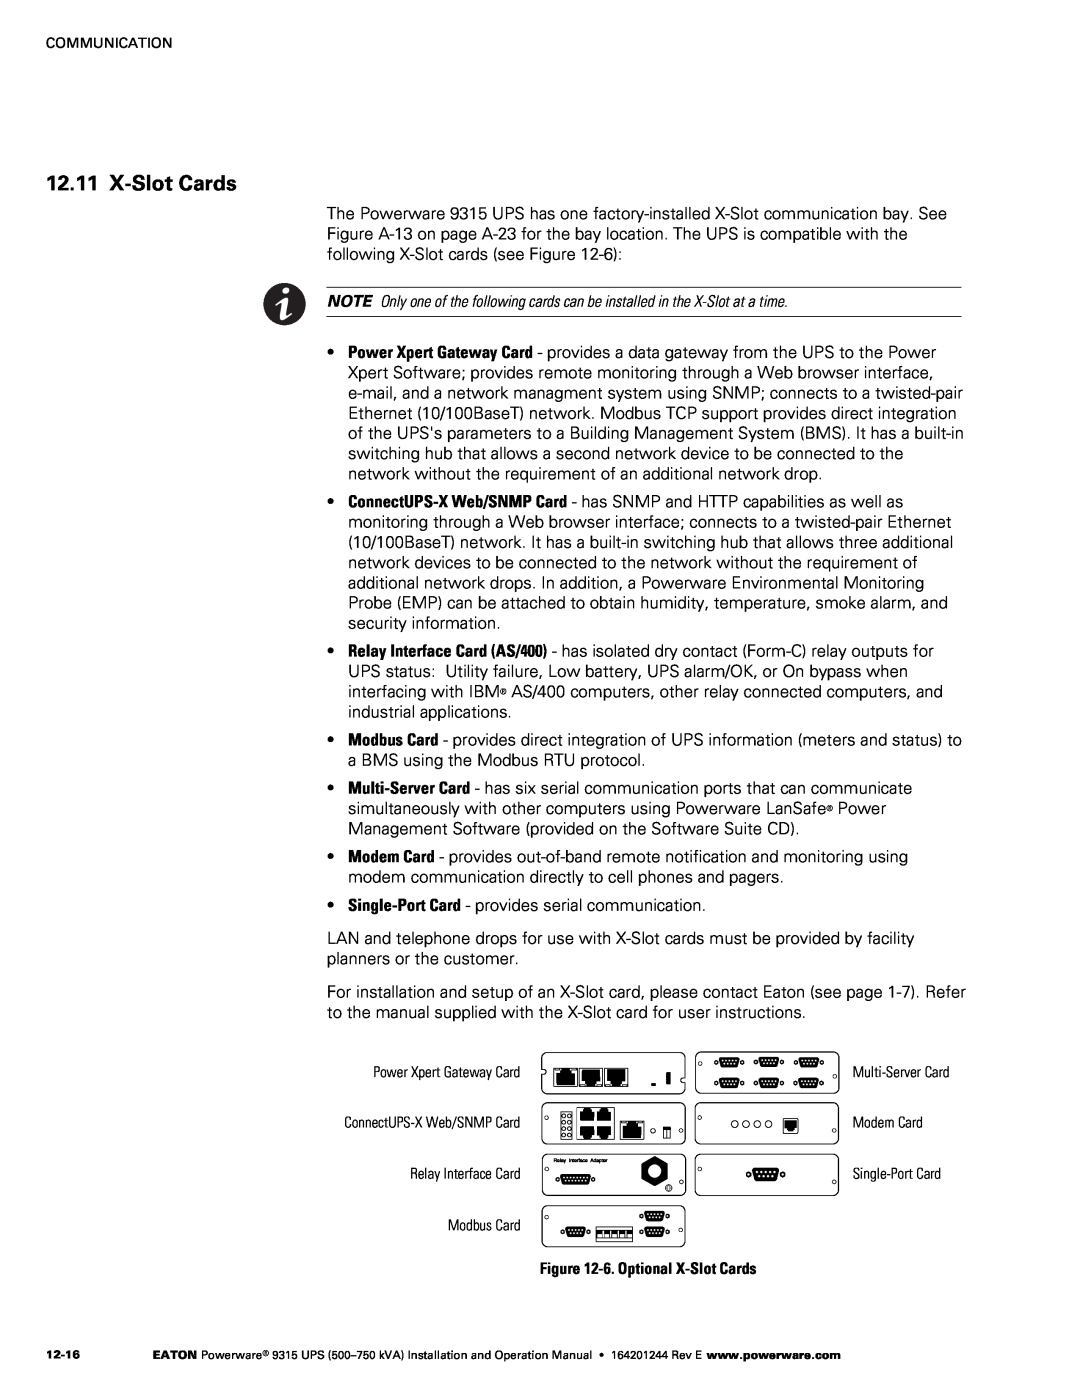 Powerware Powerware 9315 operation manual X-Slot Cards 